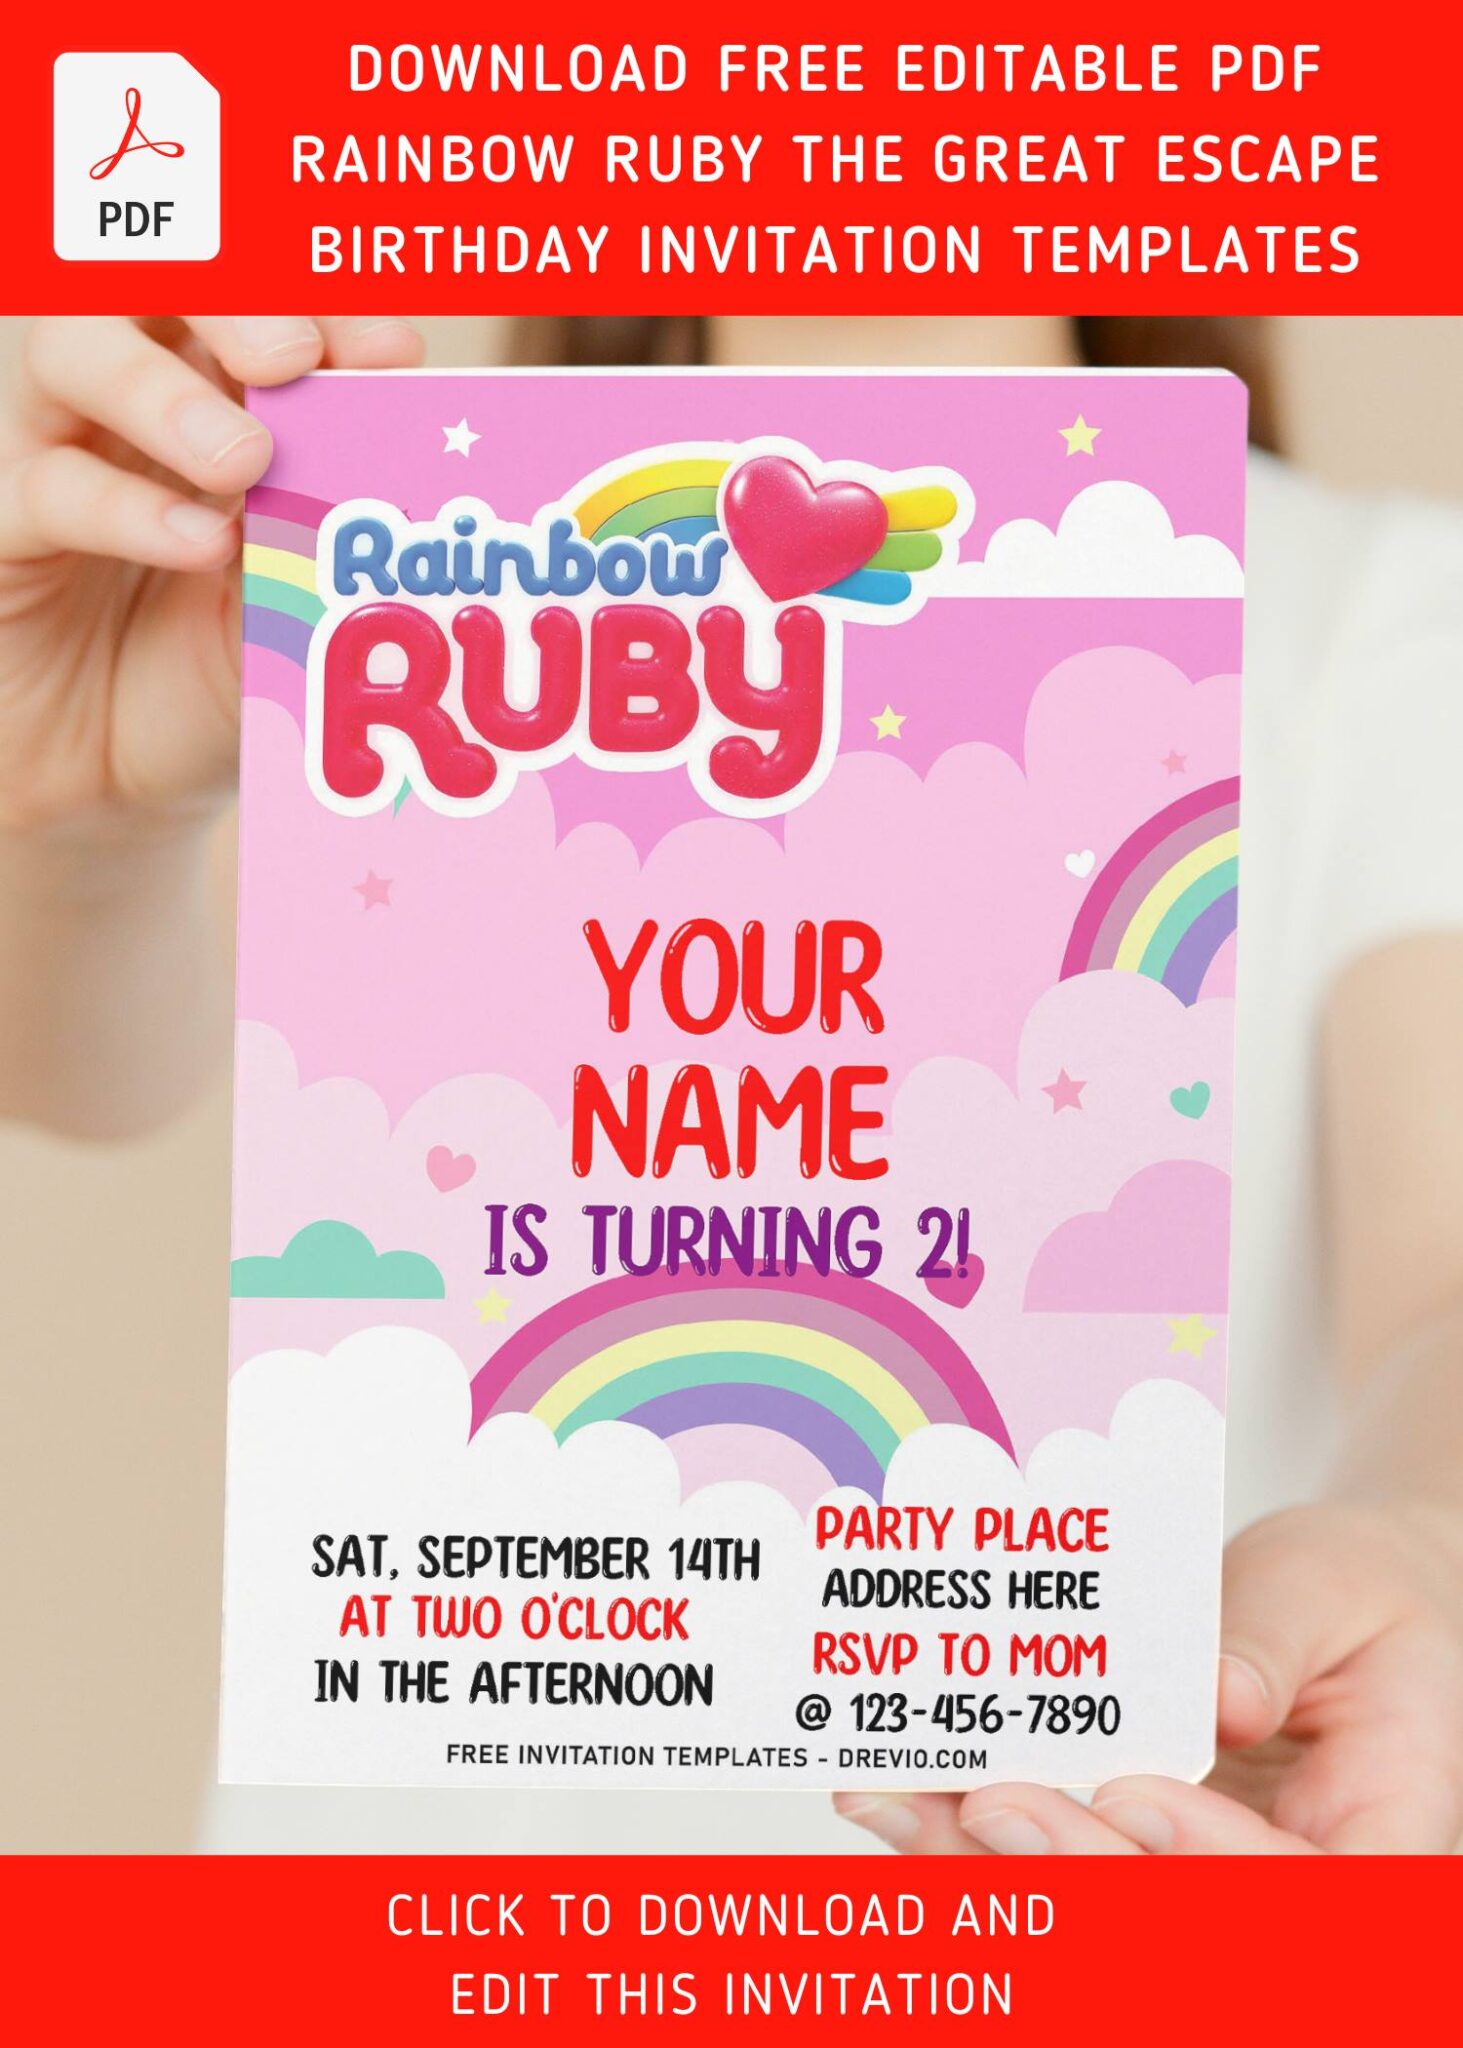 Free Editable PDF – Sweet Rainbow Ruby The Great Escape Birthday